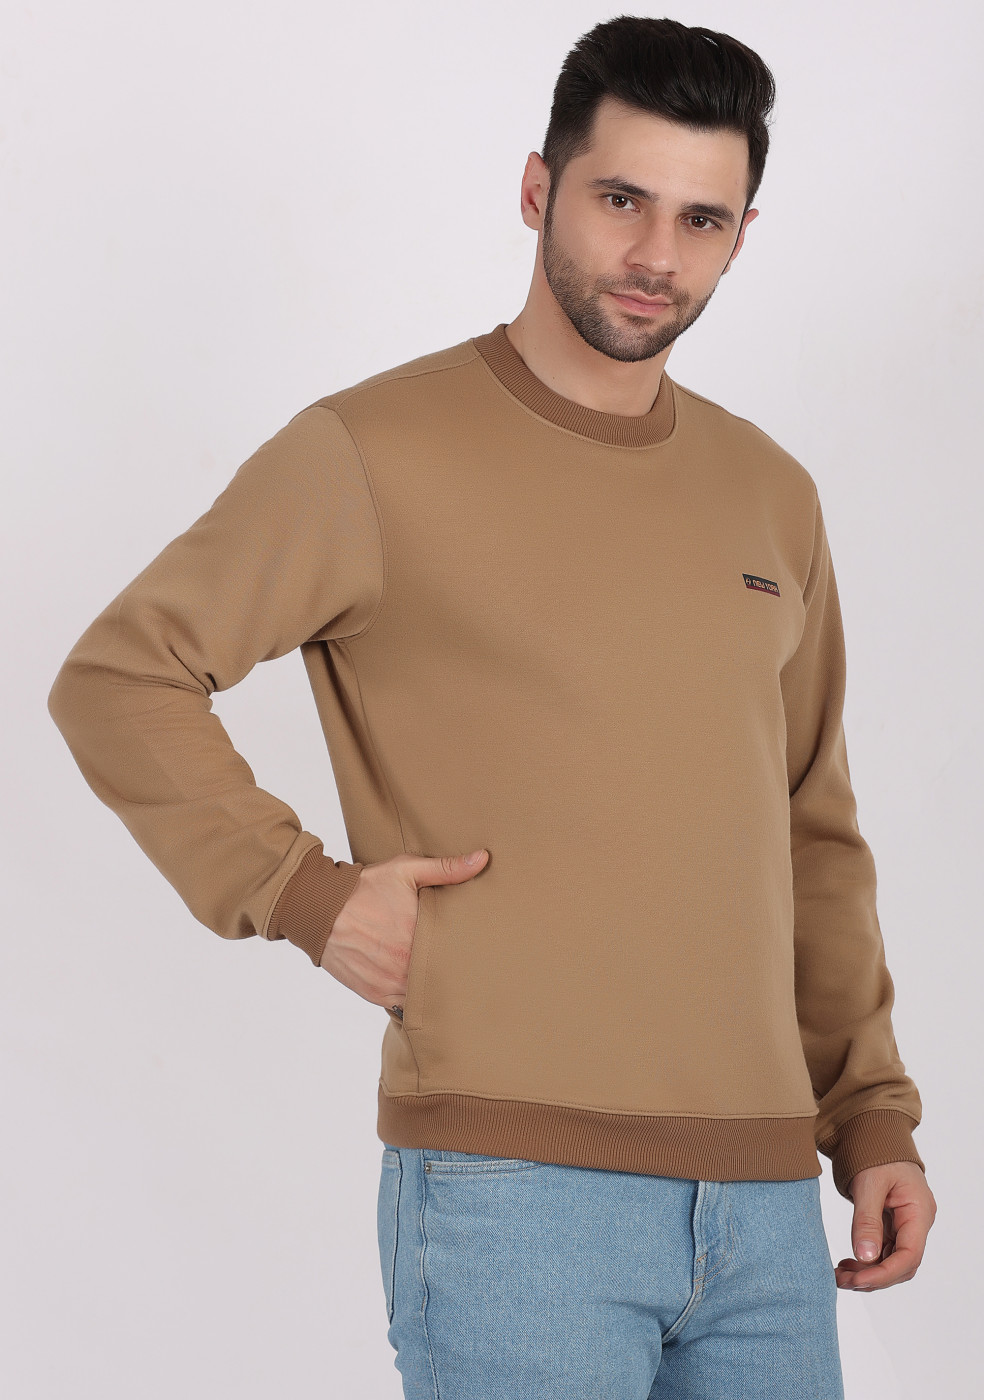 HUKH Khaki Color Sweatshirt For Men